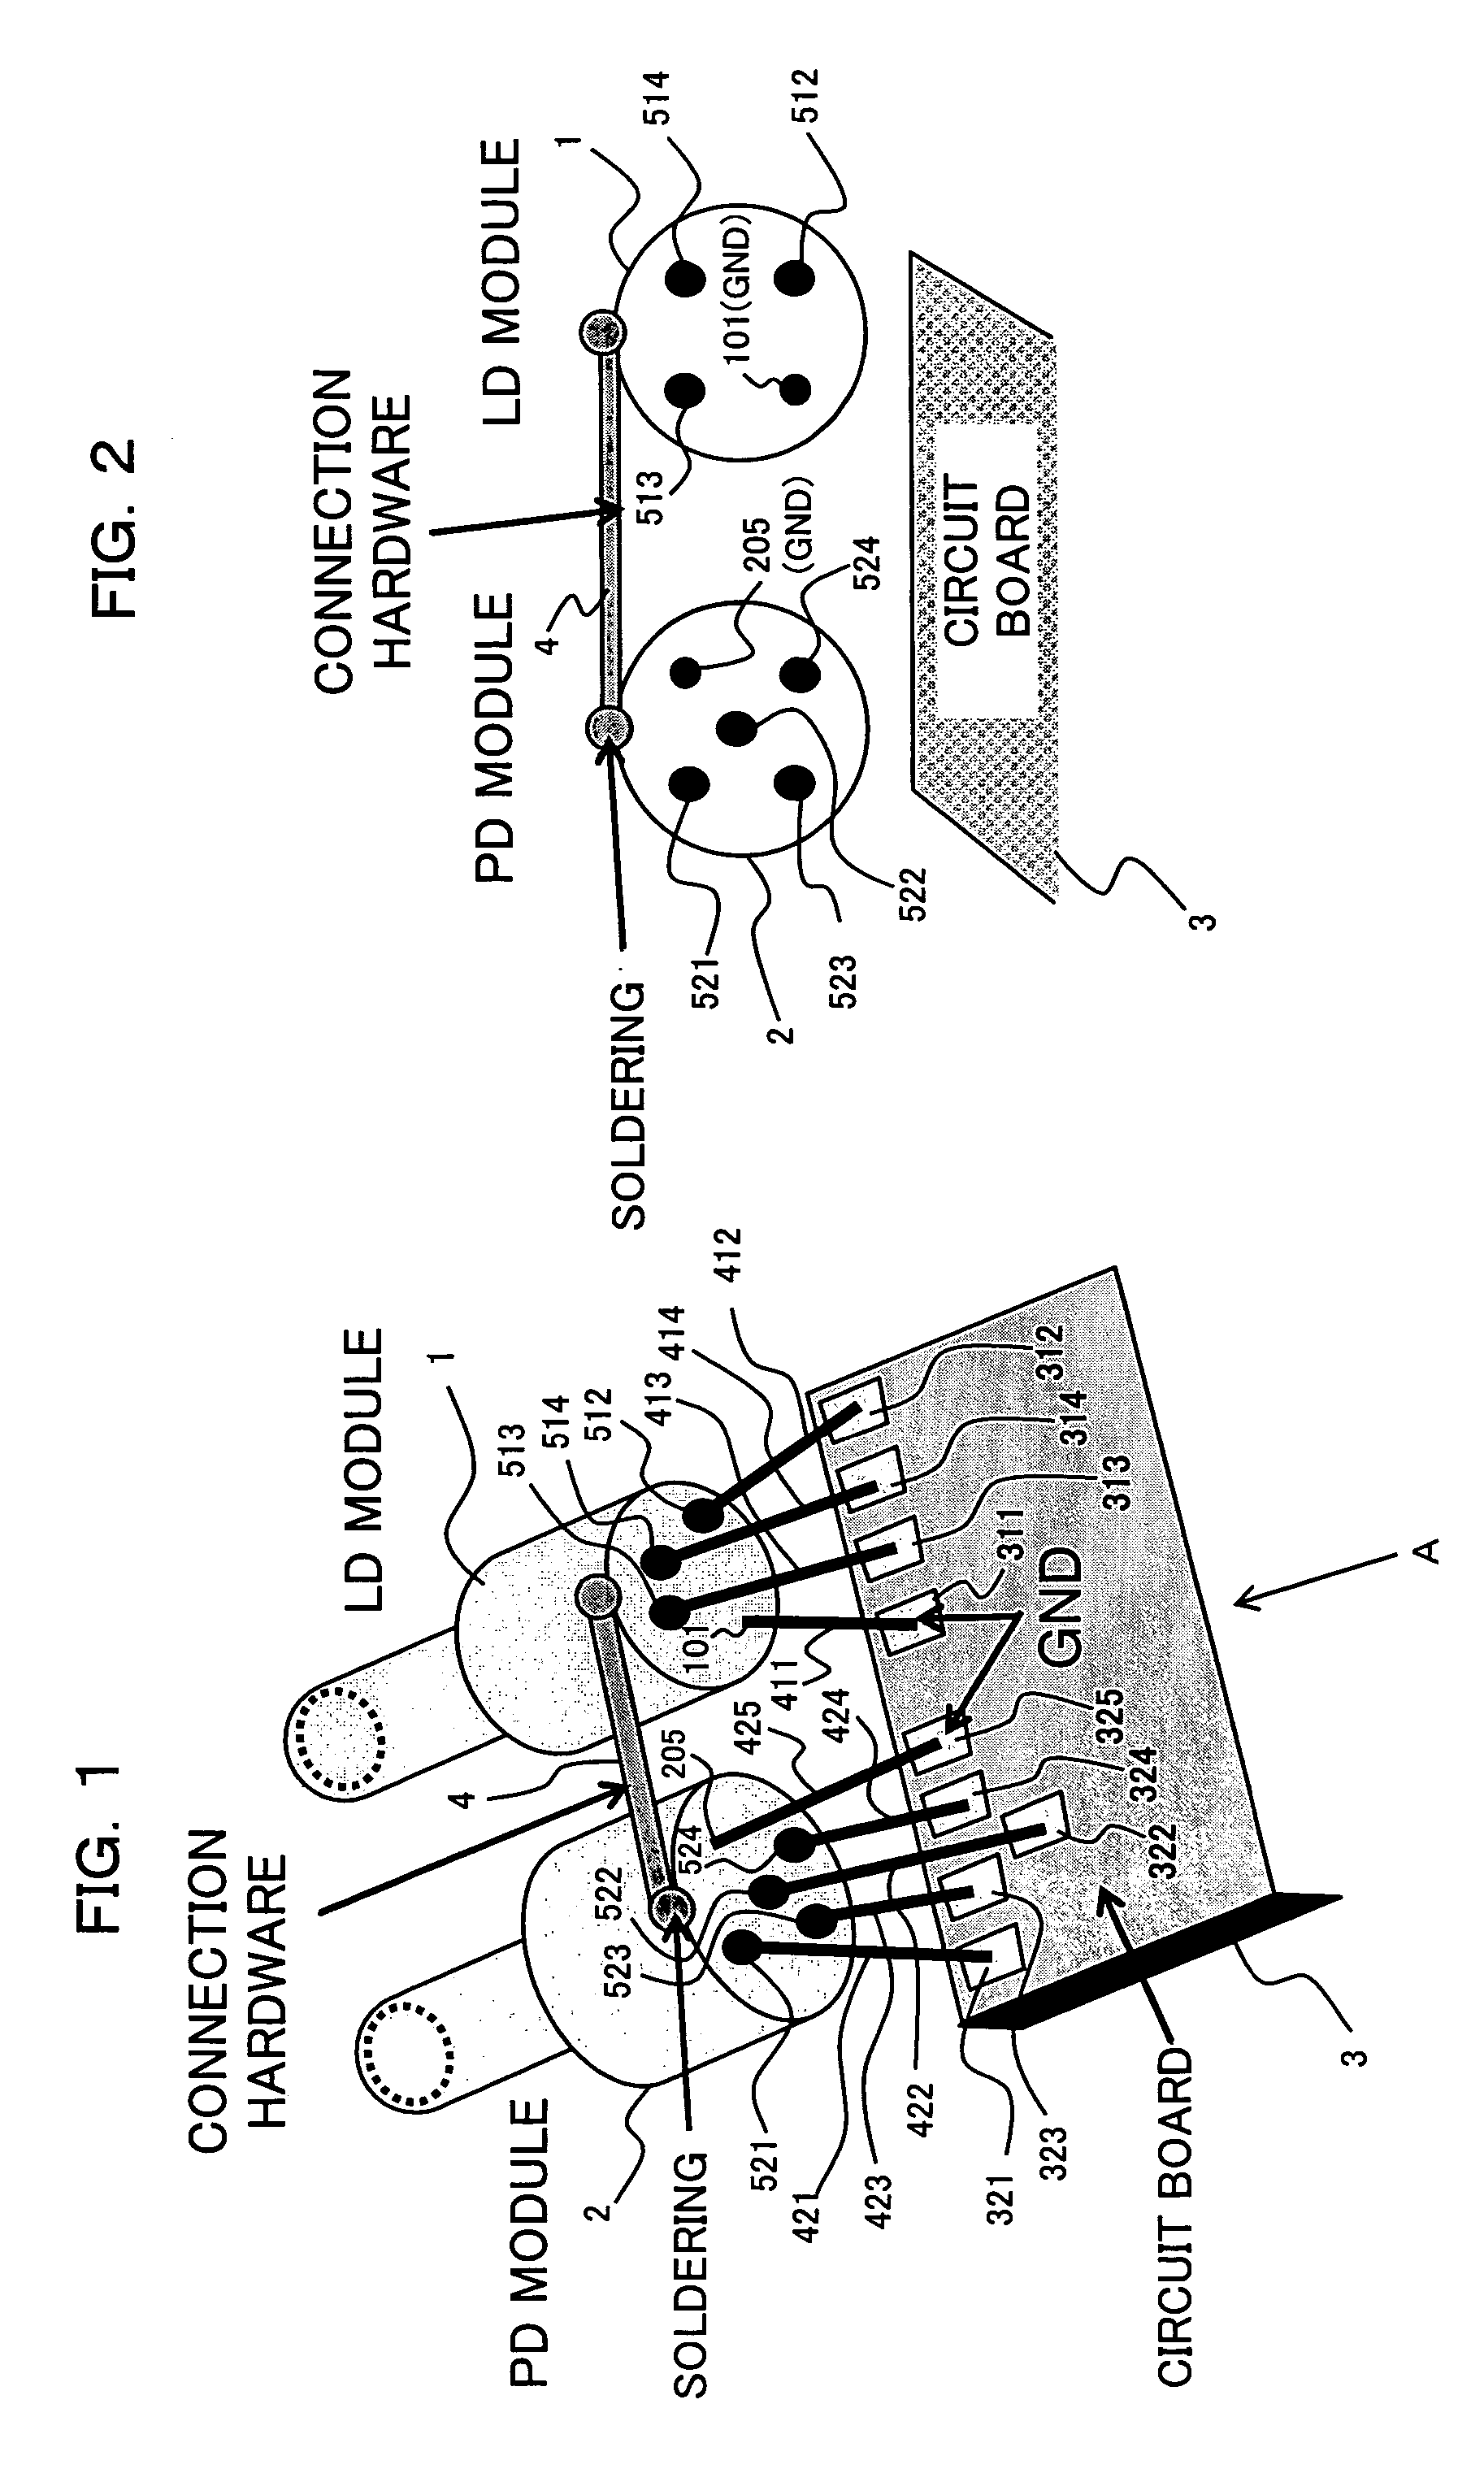 Optical transceiver module